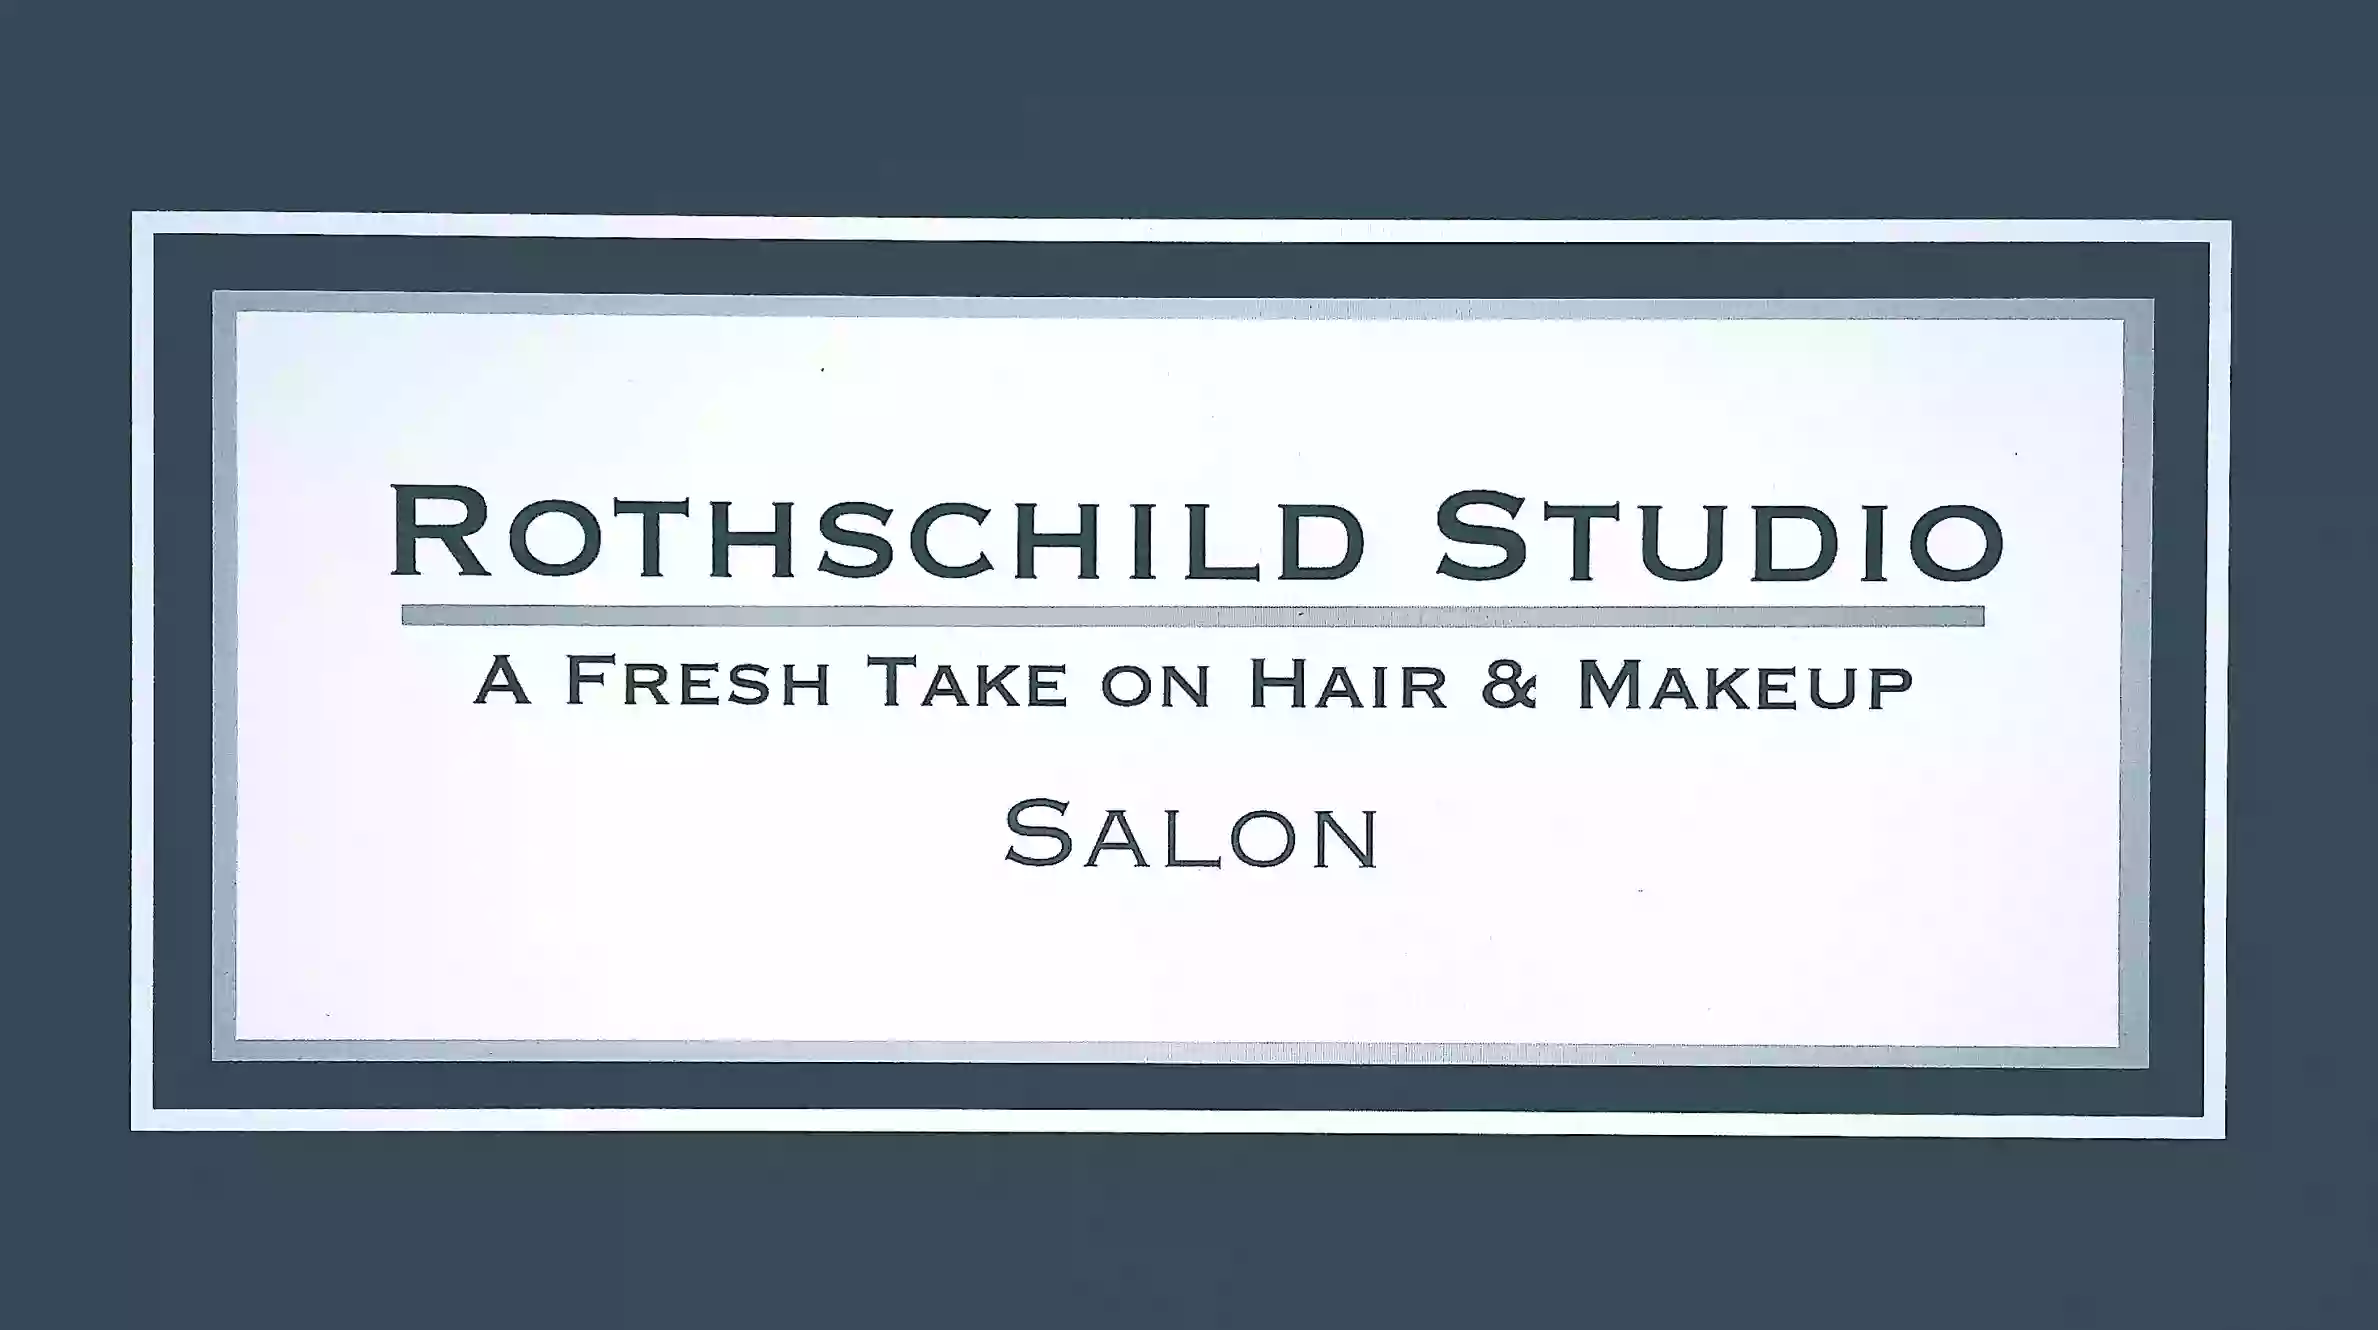 Rothschild Studio